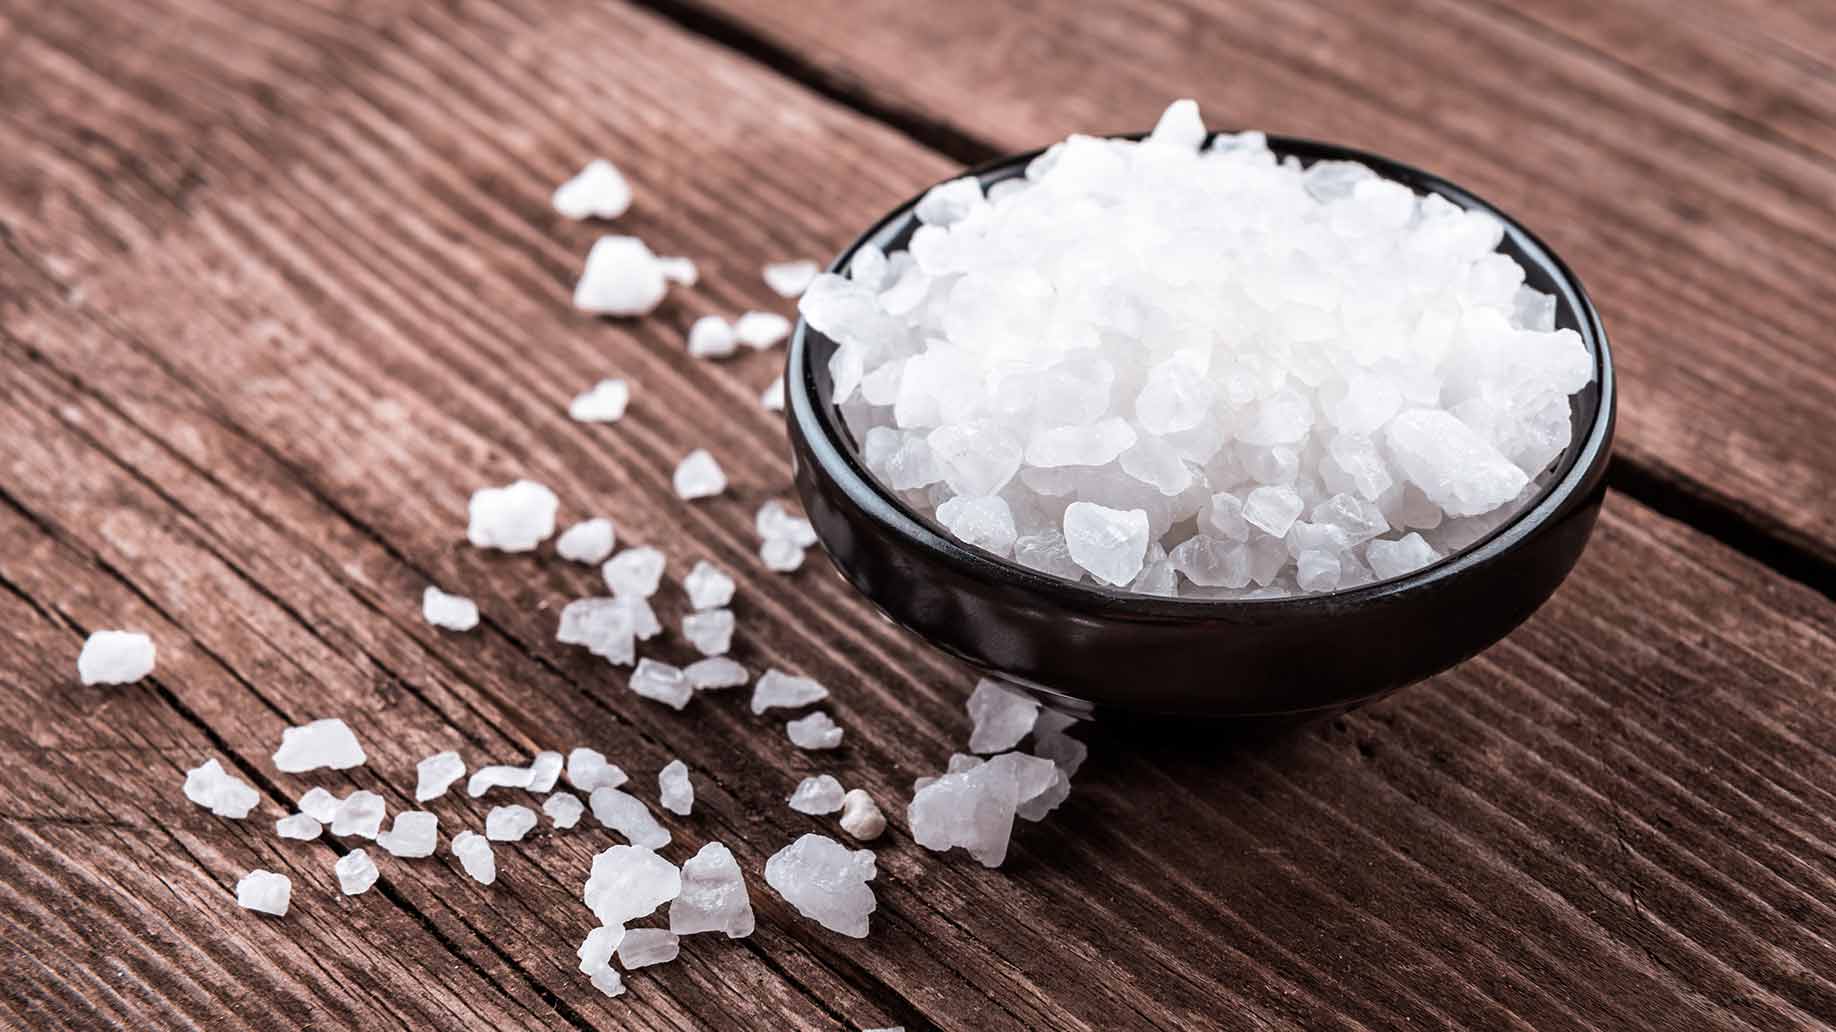 epsom salt detox bath diy remove toxins naturally